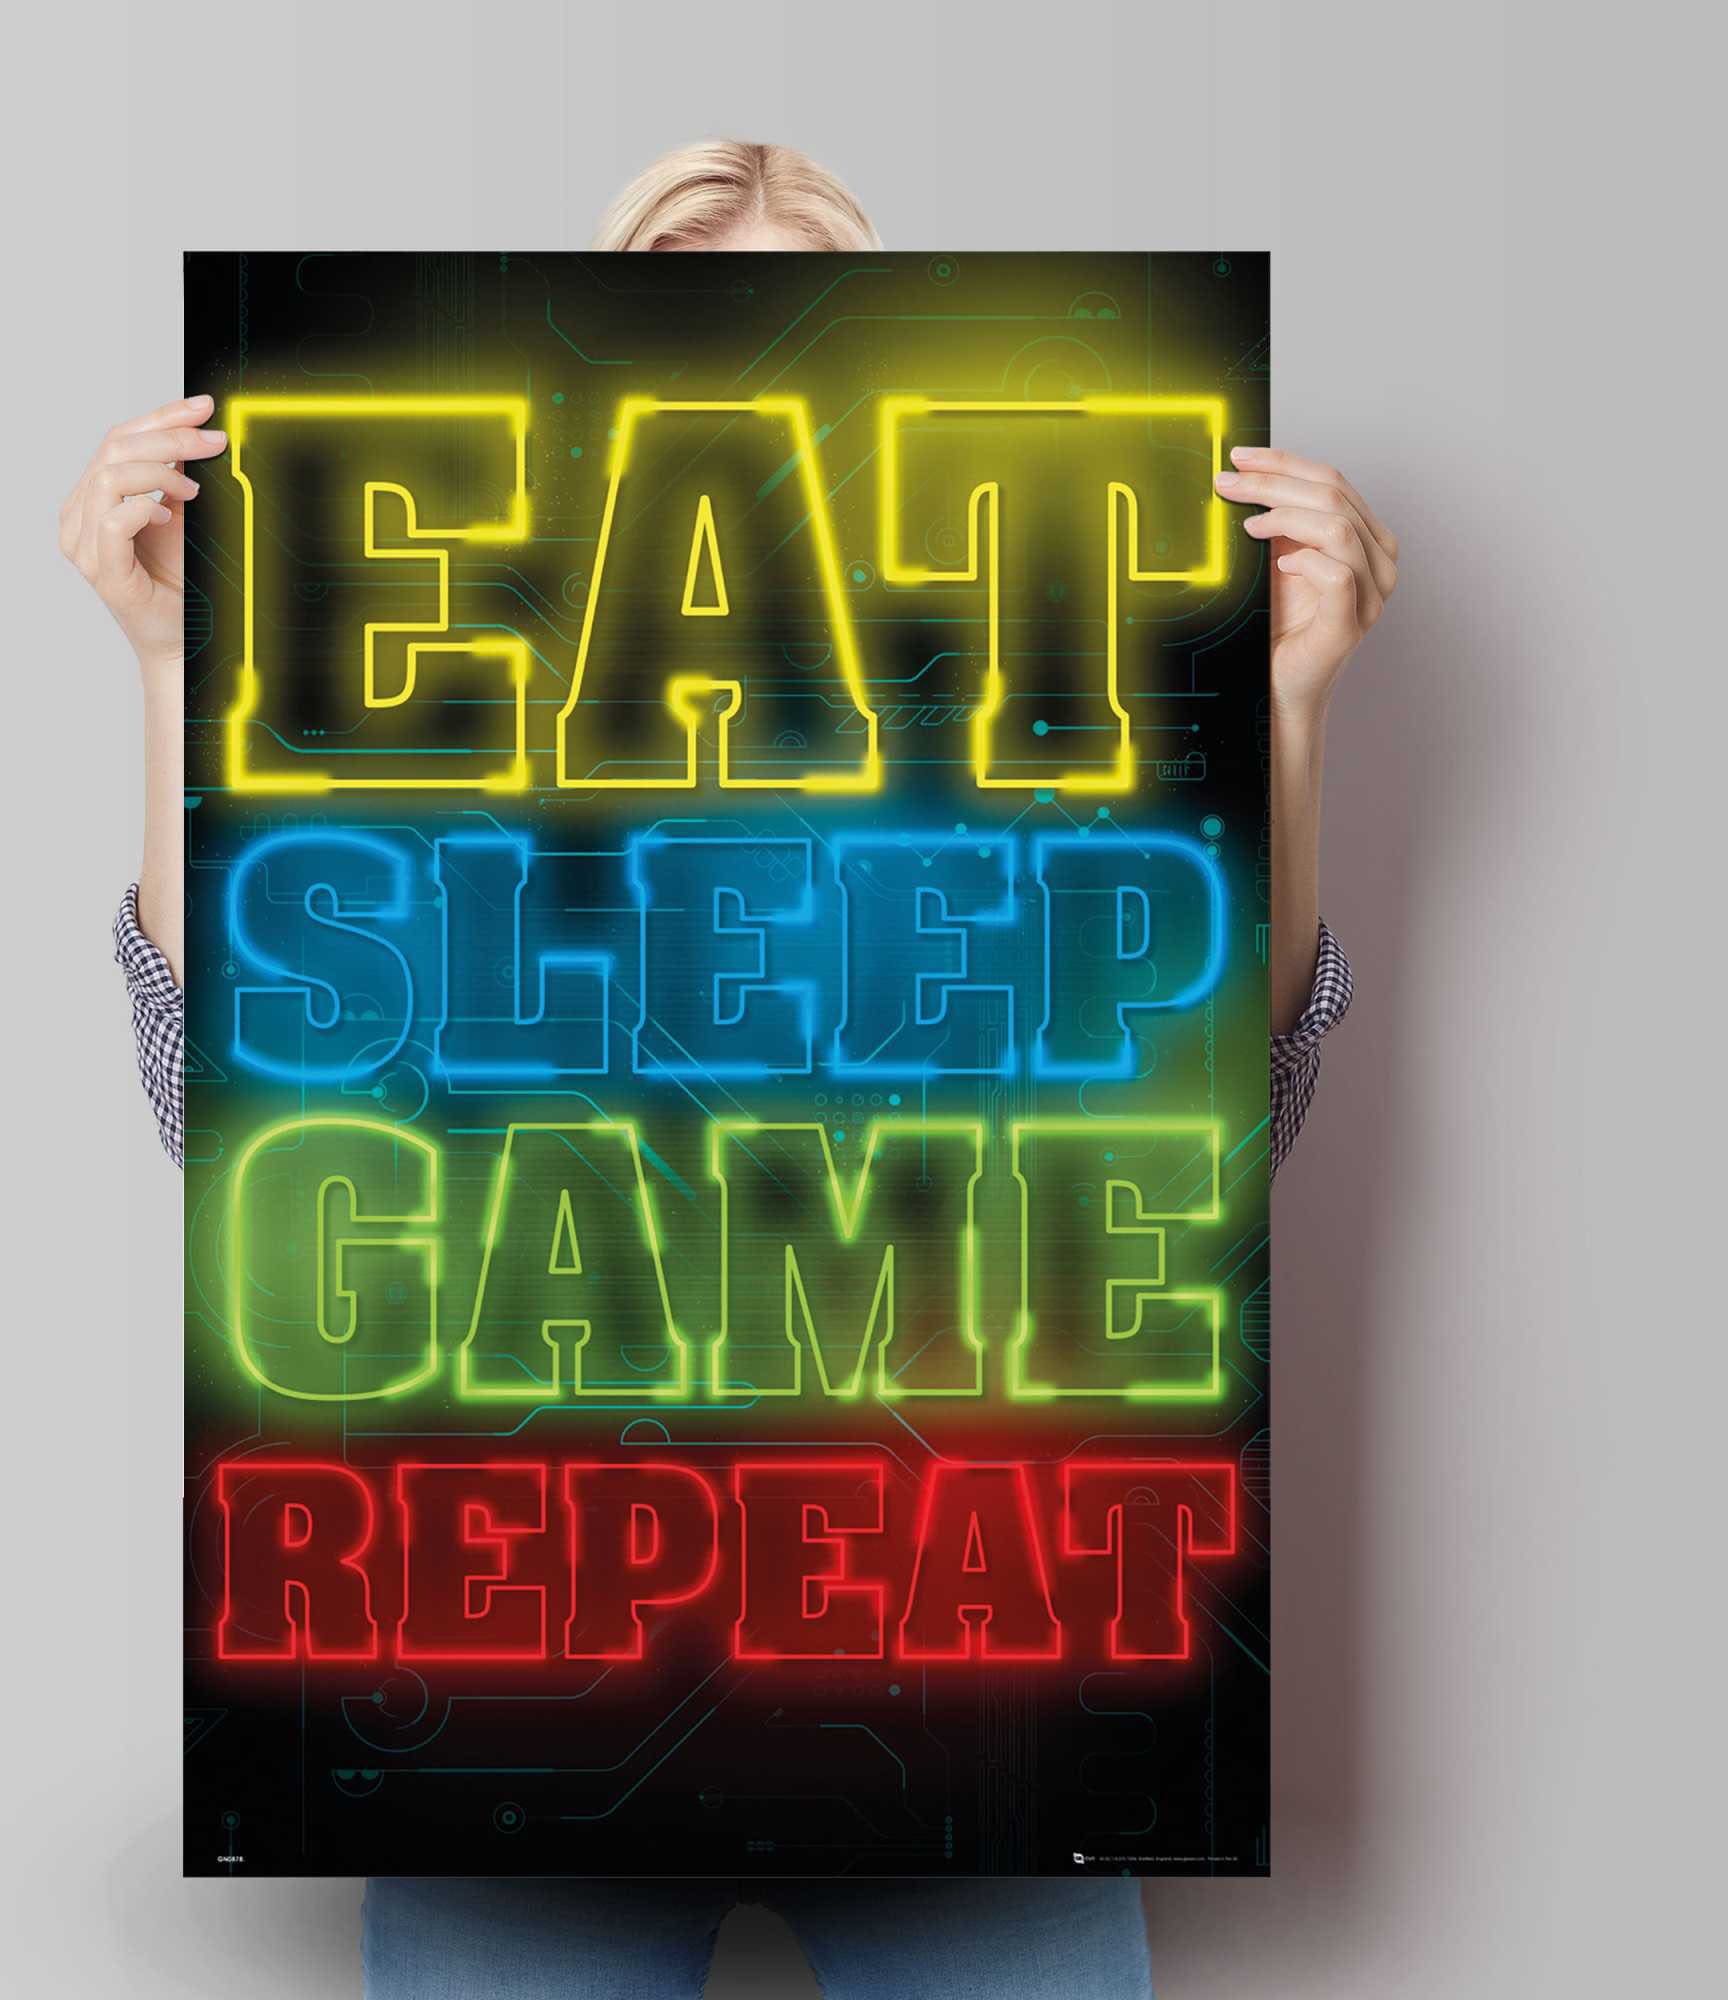 Spiele, Poster »Poster Eat Raten repeat«, Reinders! auf St.) bestellen sleep game (1 Zocken